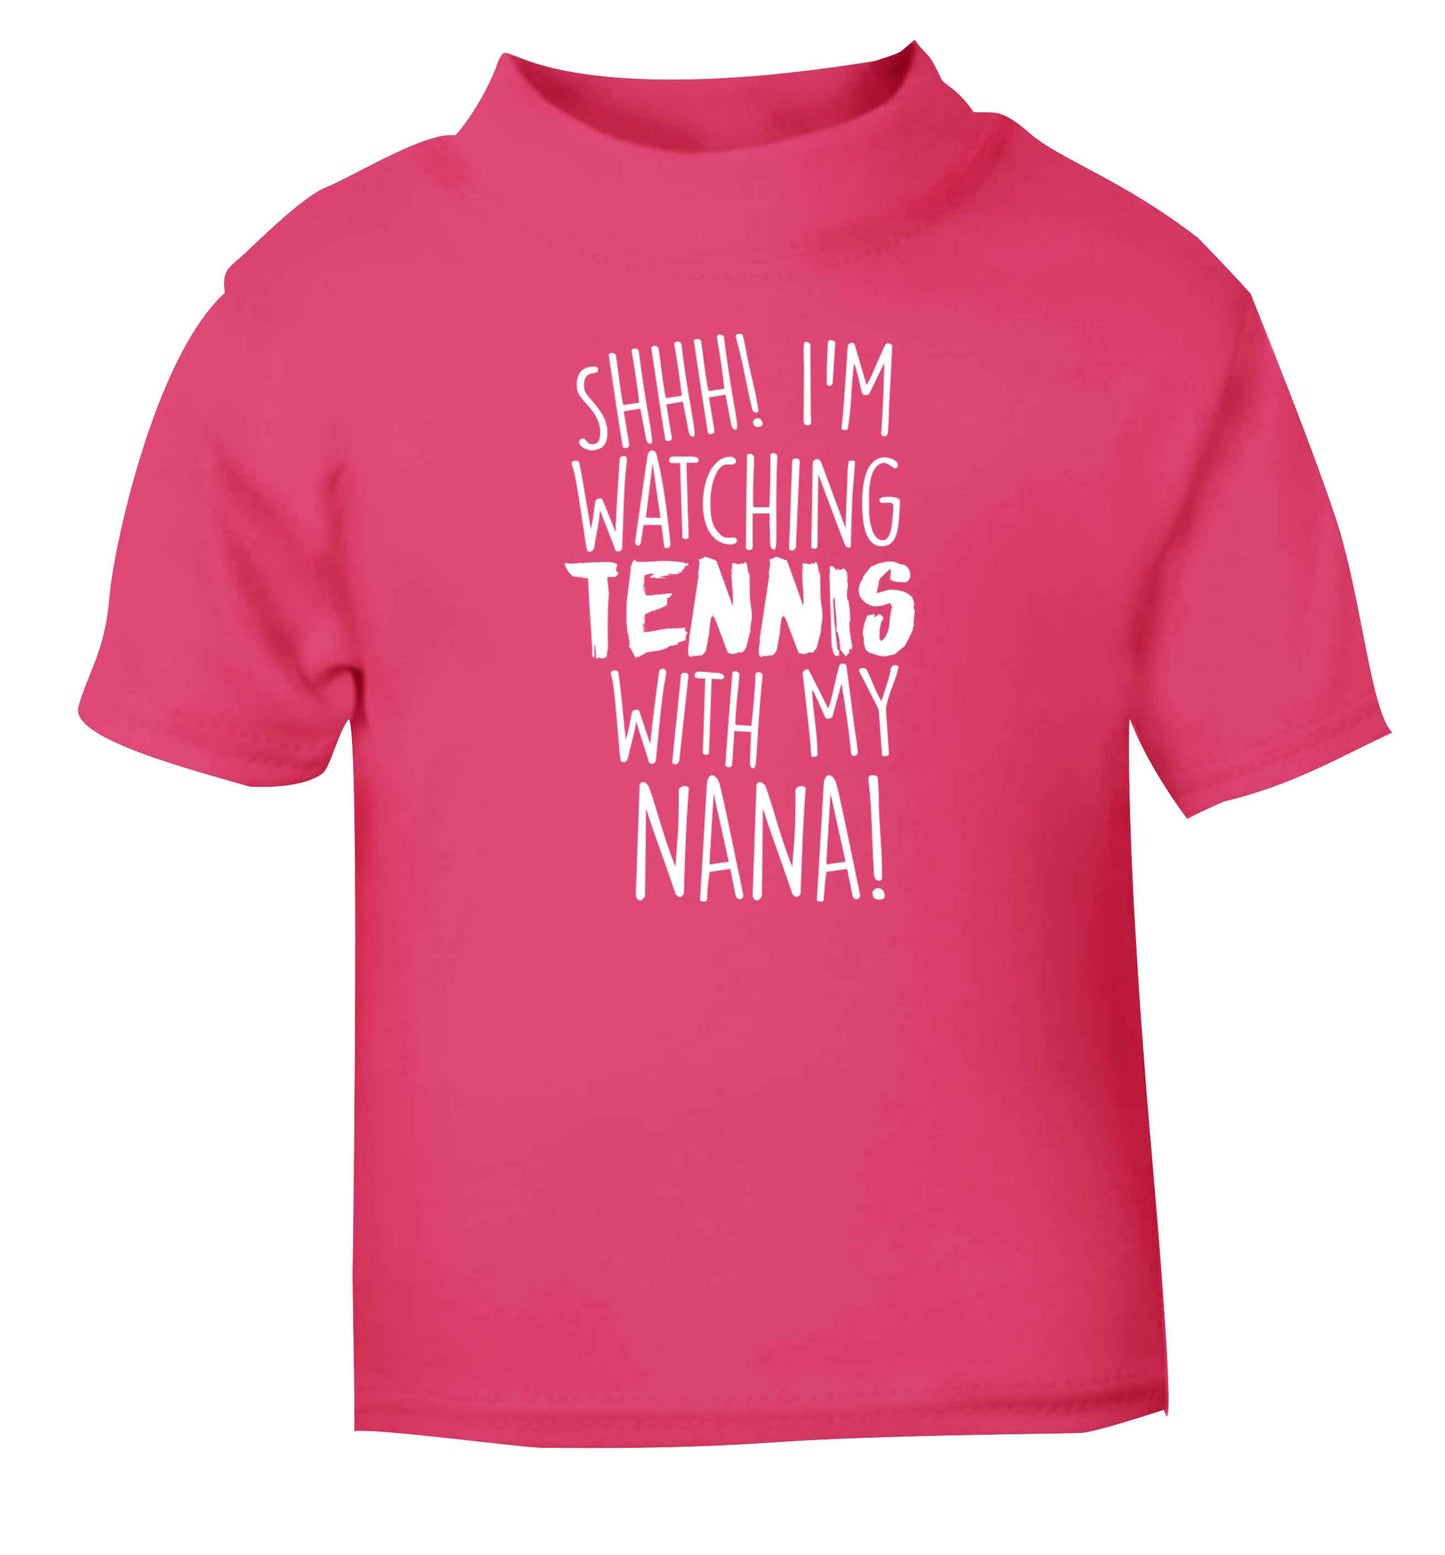 Shh! I'm watching tennis with my nana! pink Baby Toddler Tshirt 2 Years